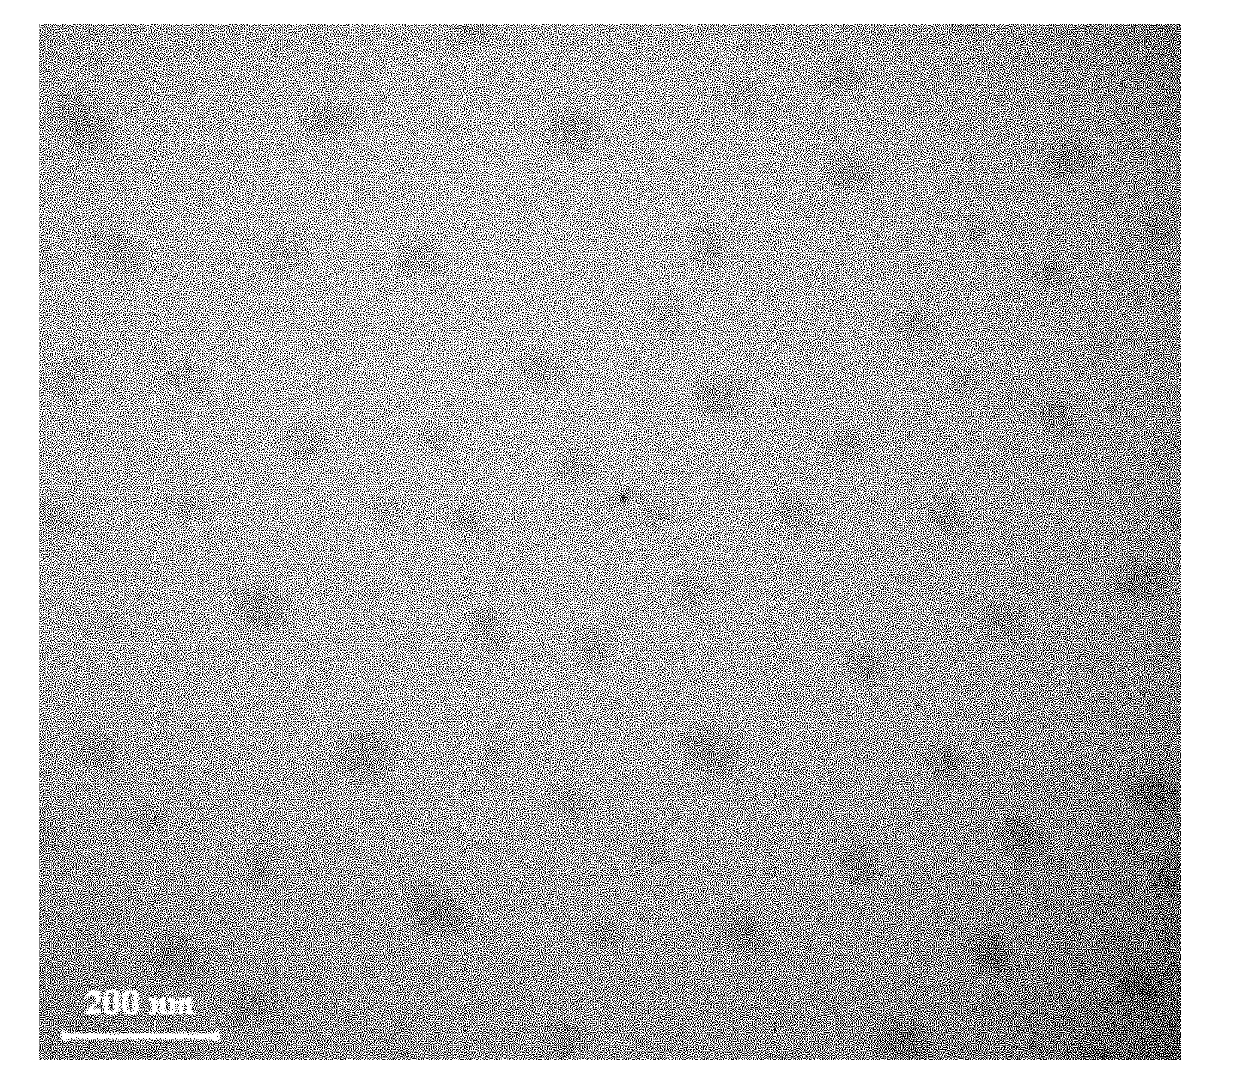 Polymer nano hydrogel and preparation method thereof